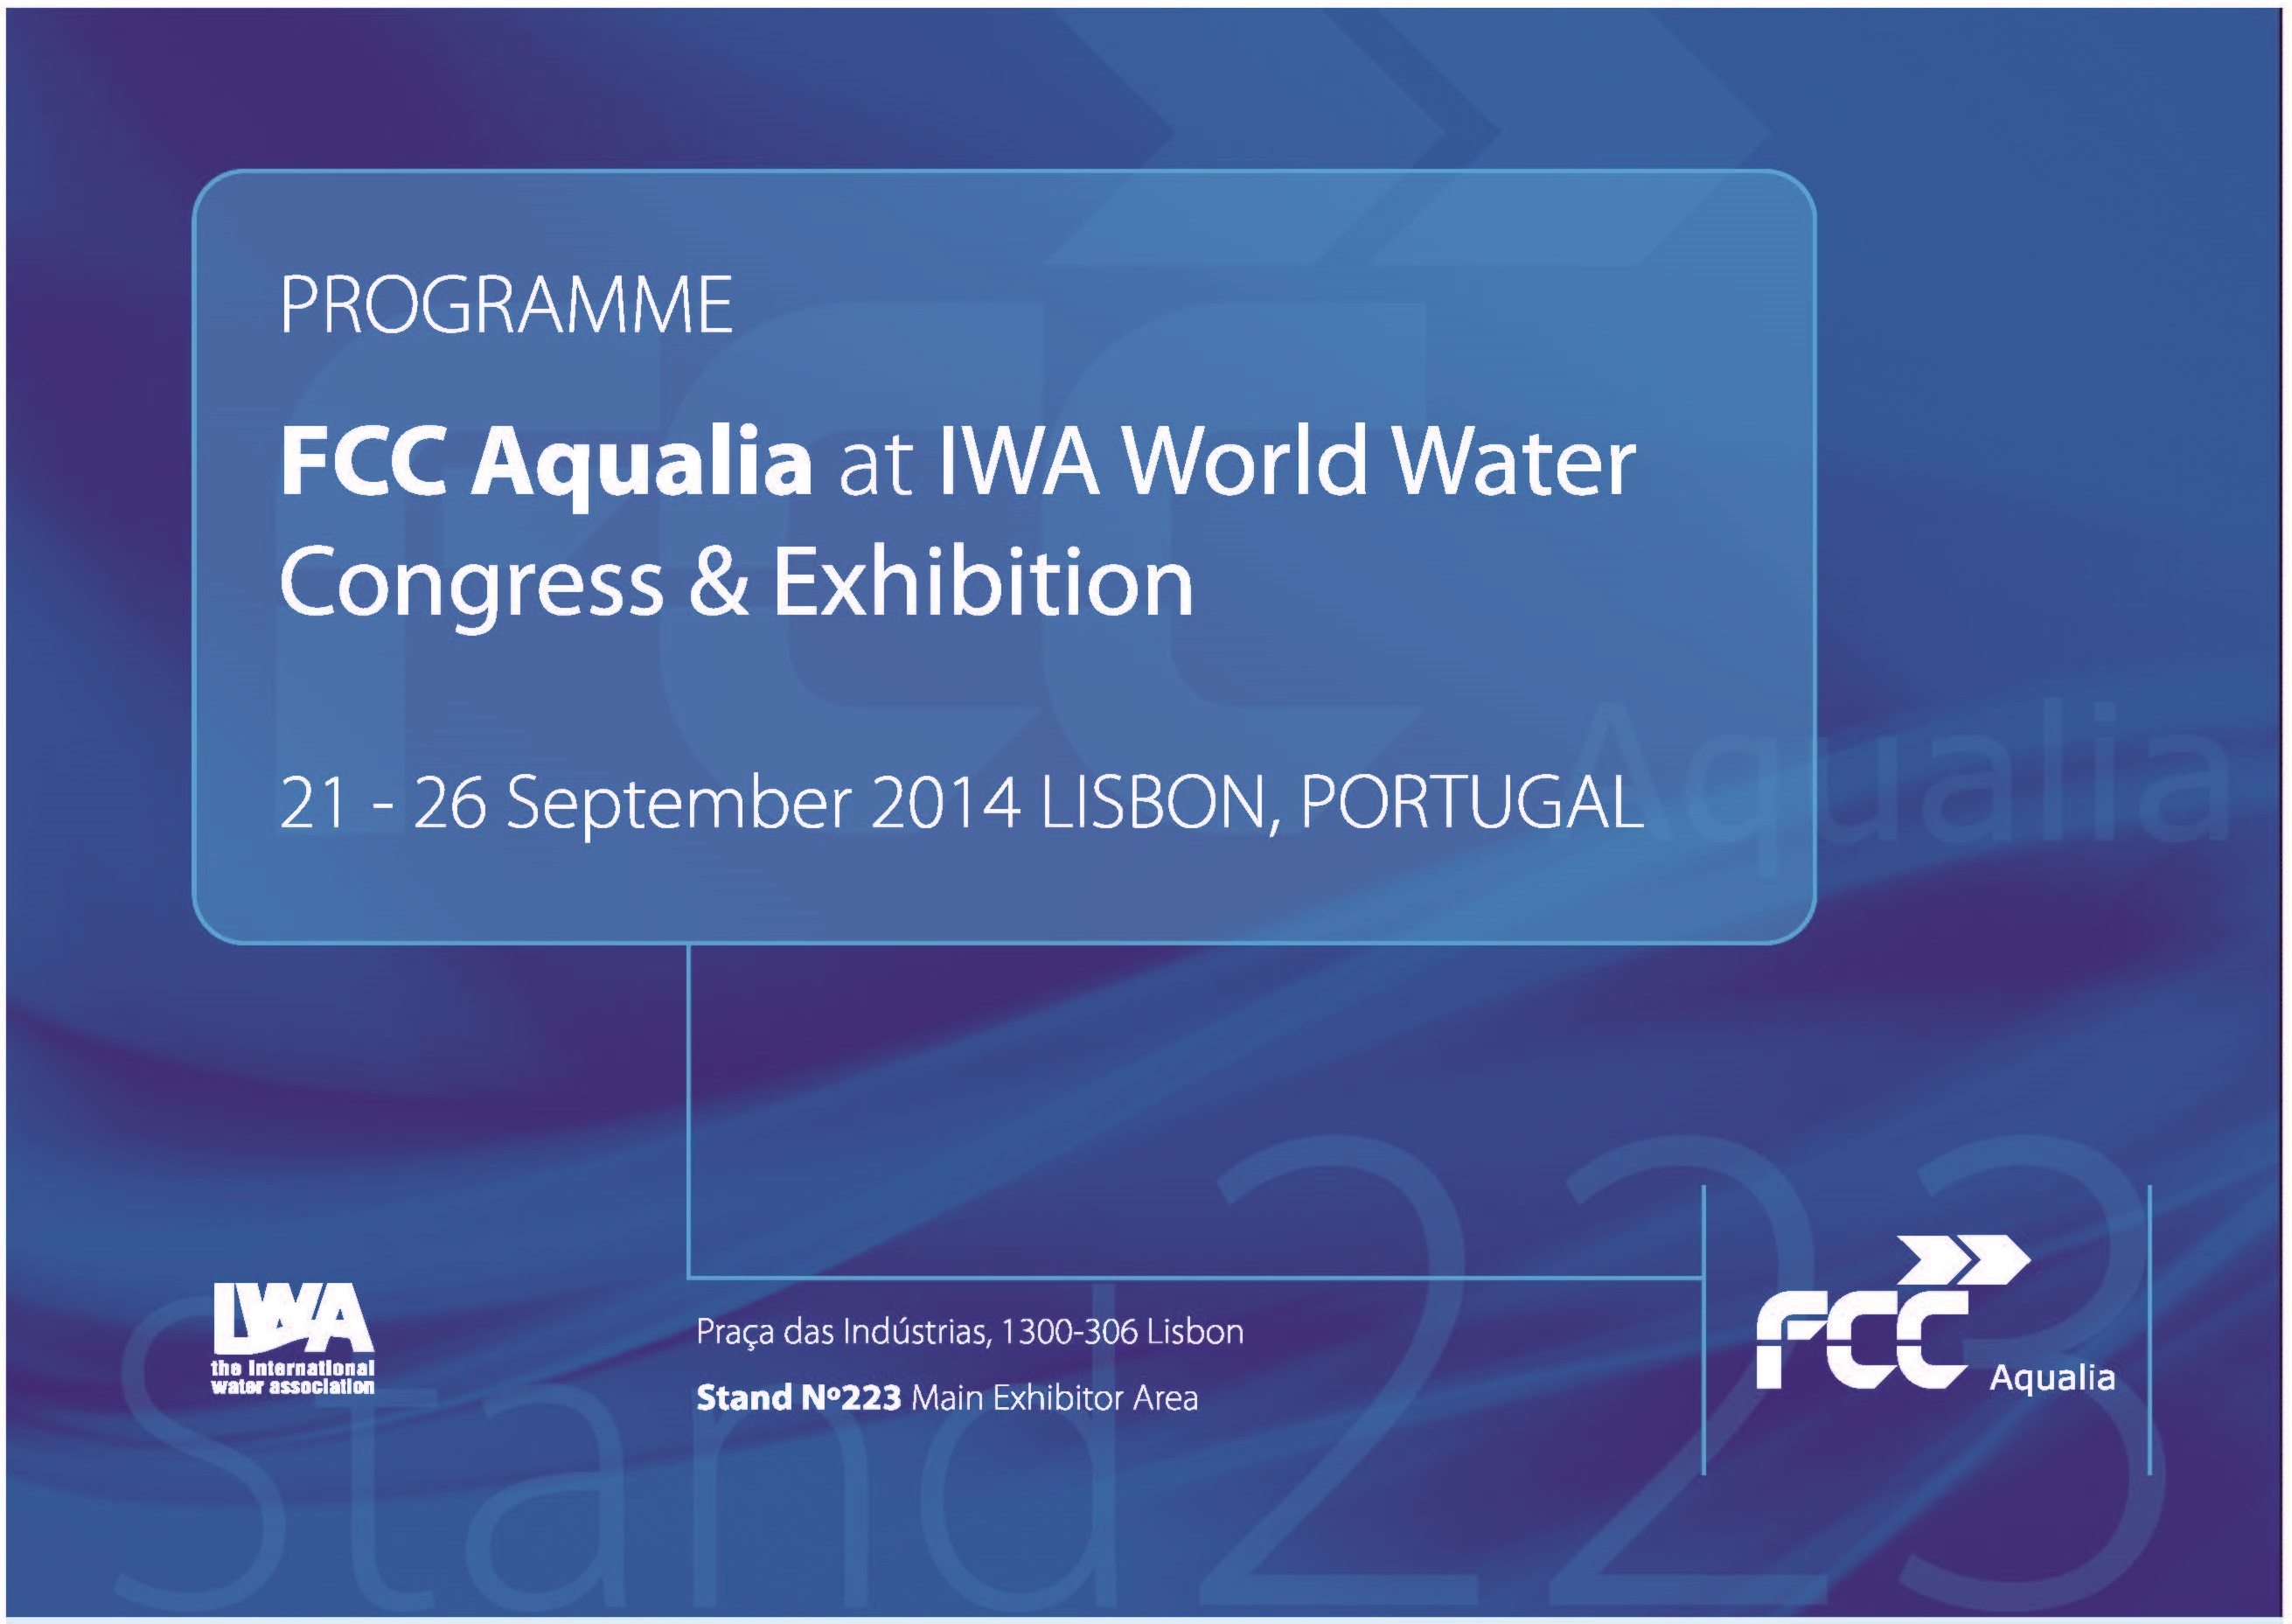 Os desenvolvementos tecnolóxicos de FCC Aqualia protagonistas no Congreso IWA 2014